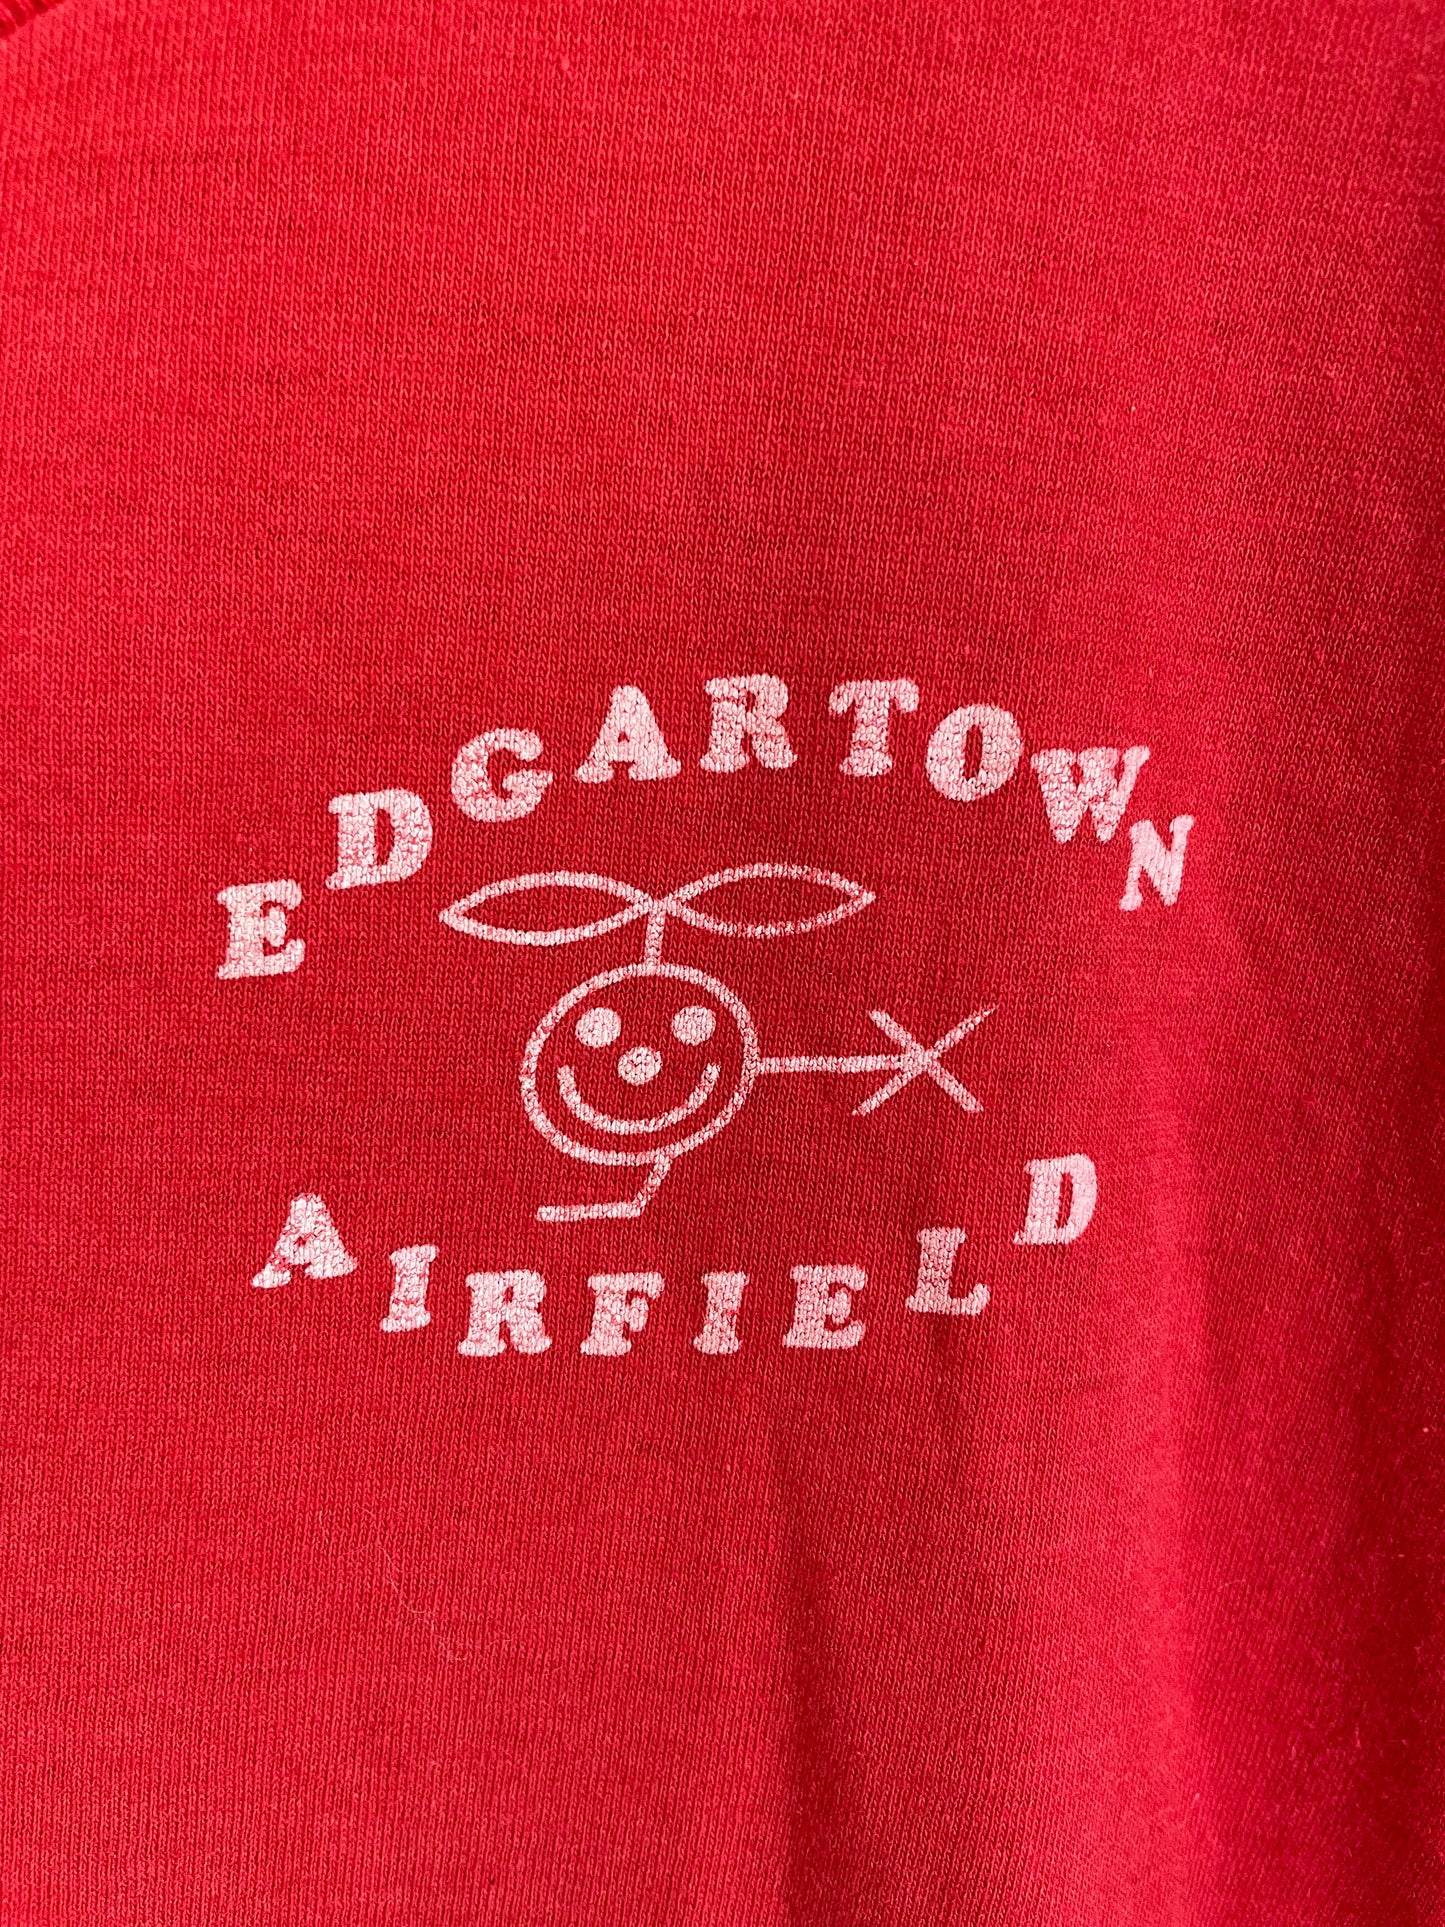 80s Edgartown Airfield Tee